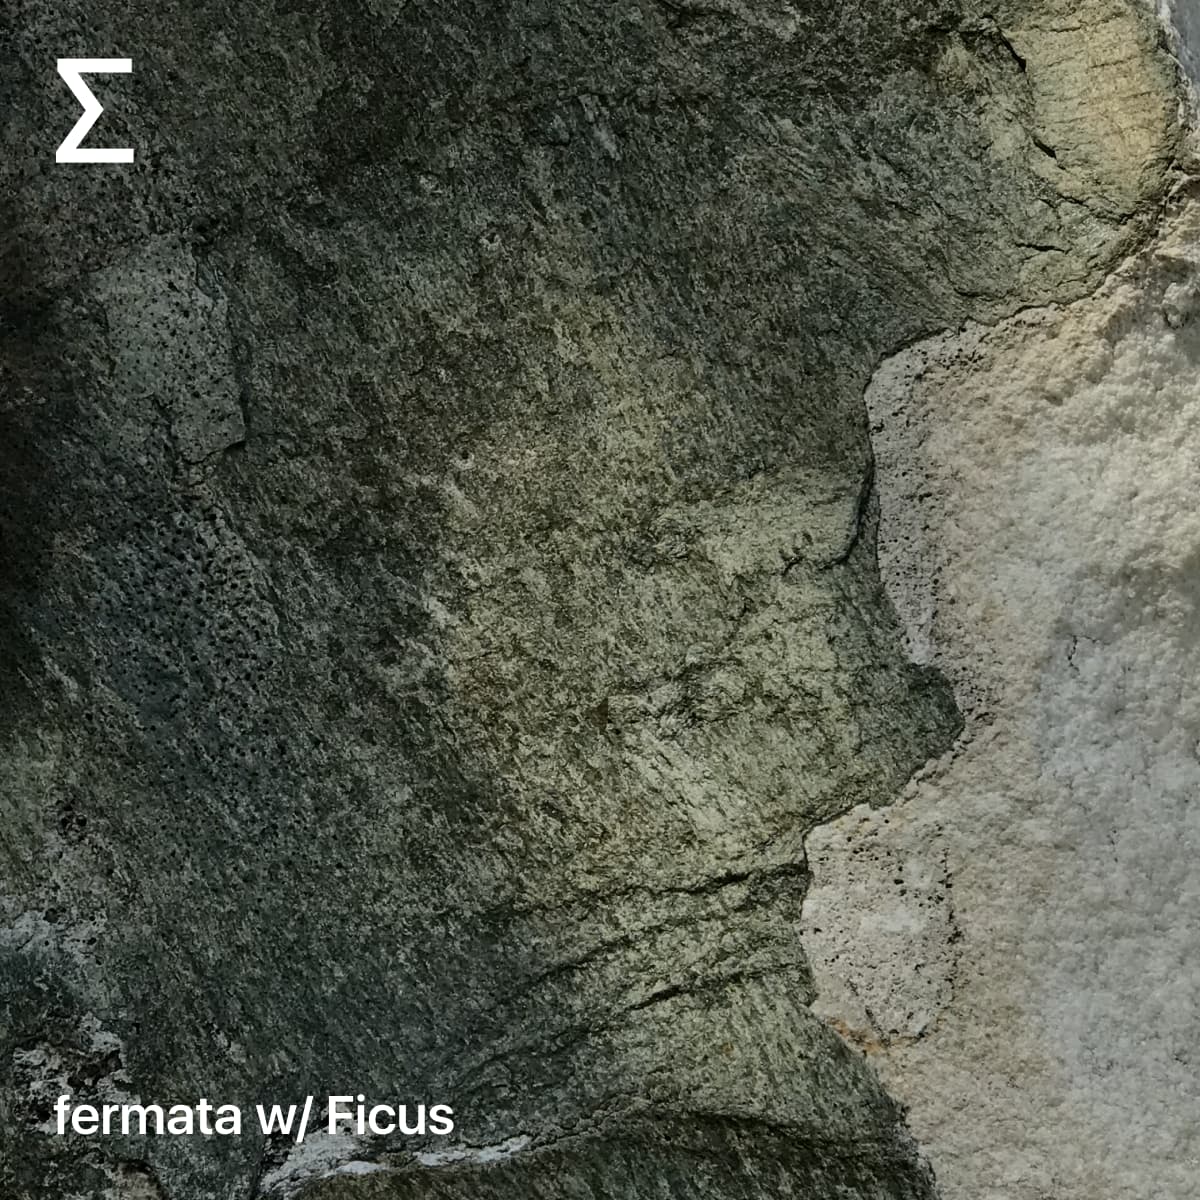 fermata w/ Ficus